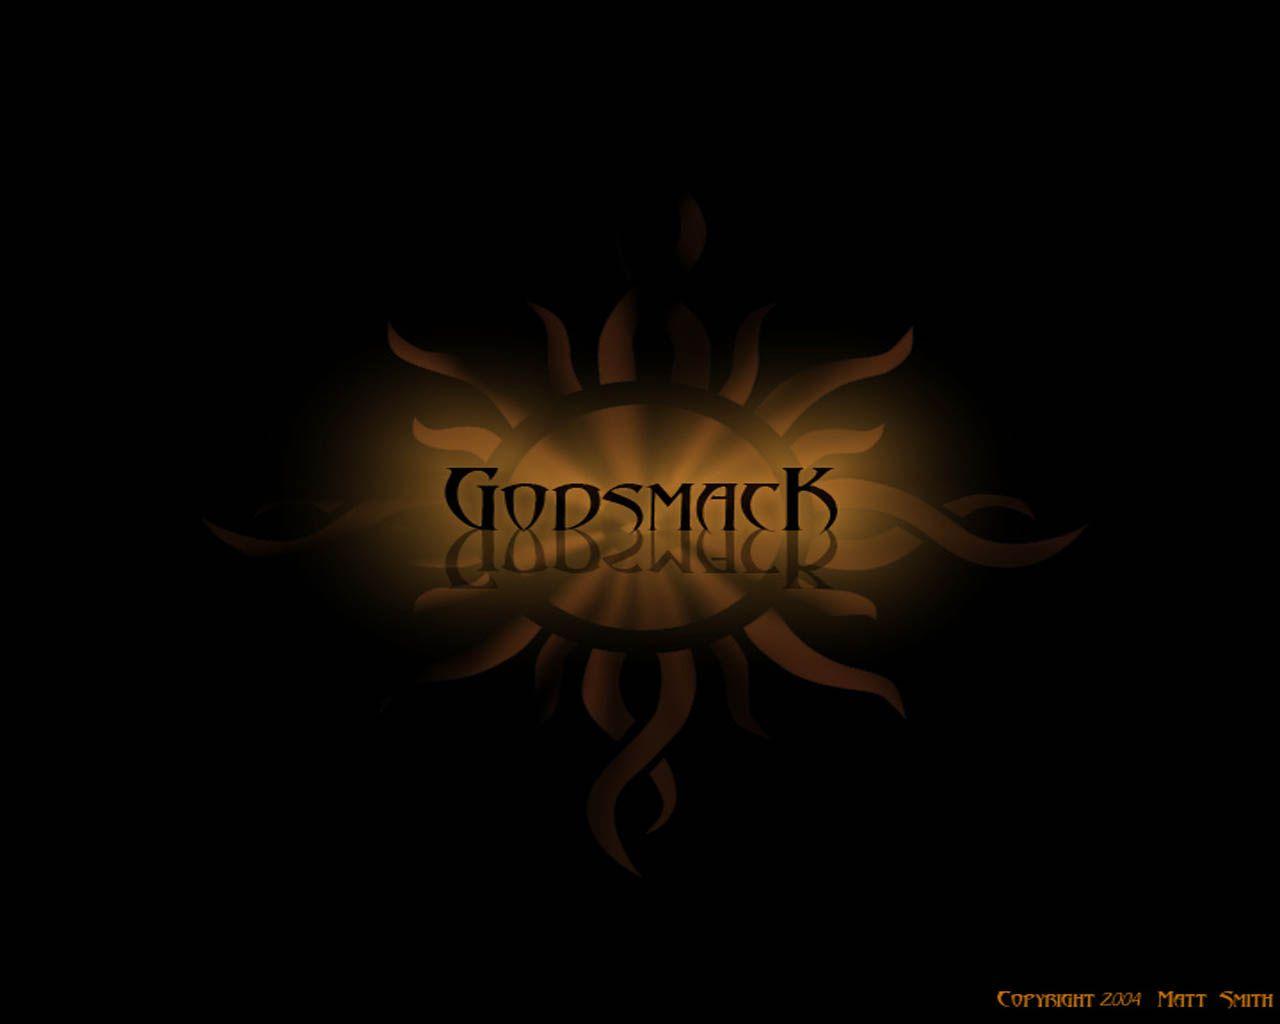 Godsmack Wallpaper, Picture, Photo, Image. Godsmack Sully Erna